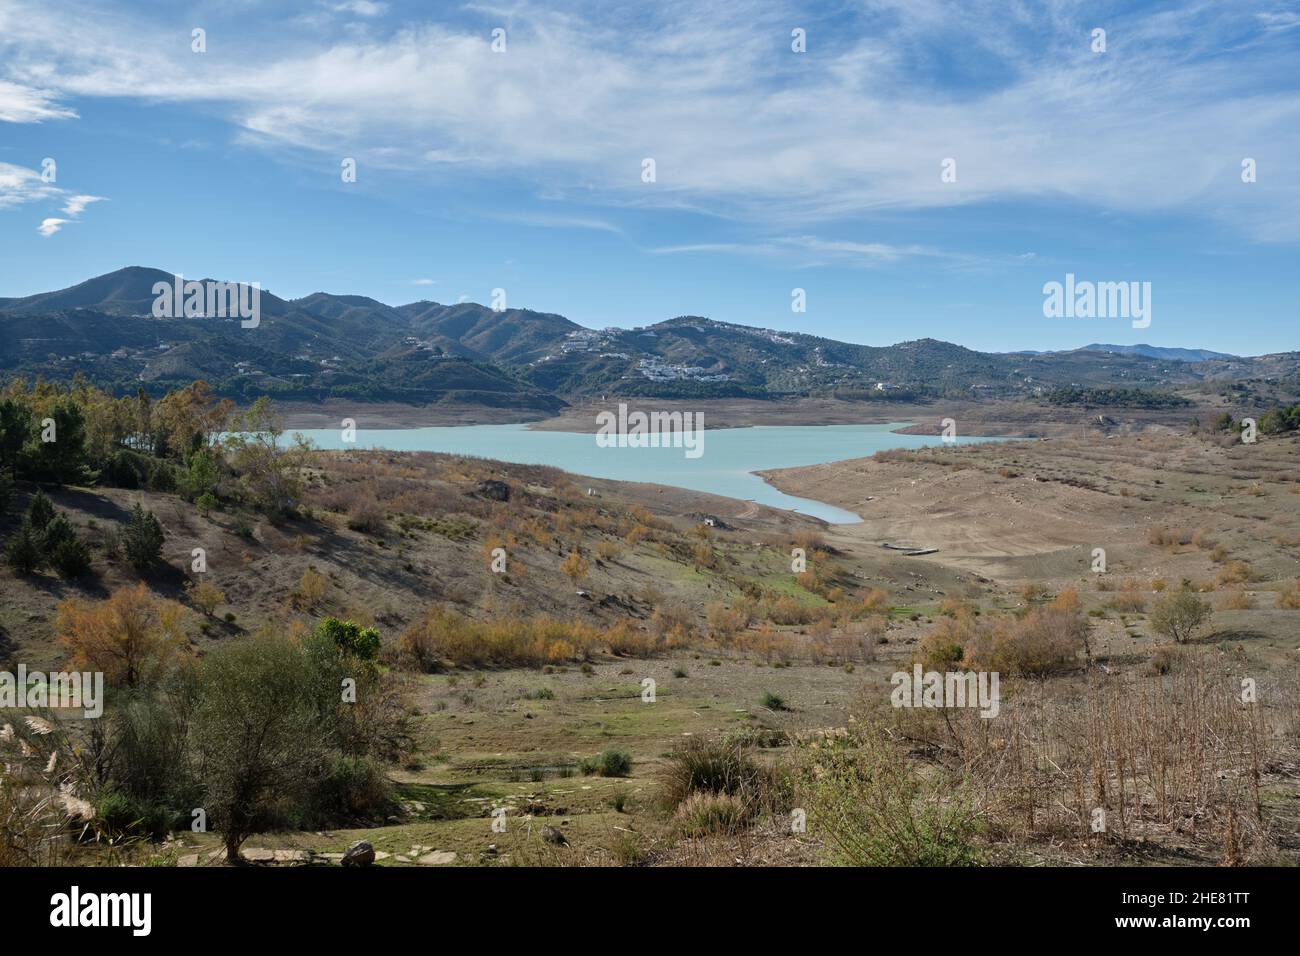 Der Stausee des Embalse de La Viñuela bei niedrigem Wasserstand (27 hm3 - 16,36 %). La Axarquia, Provinz Malaga, Andalusien, Spanien. Stockfoto